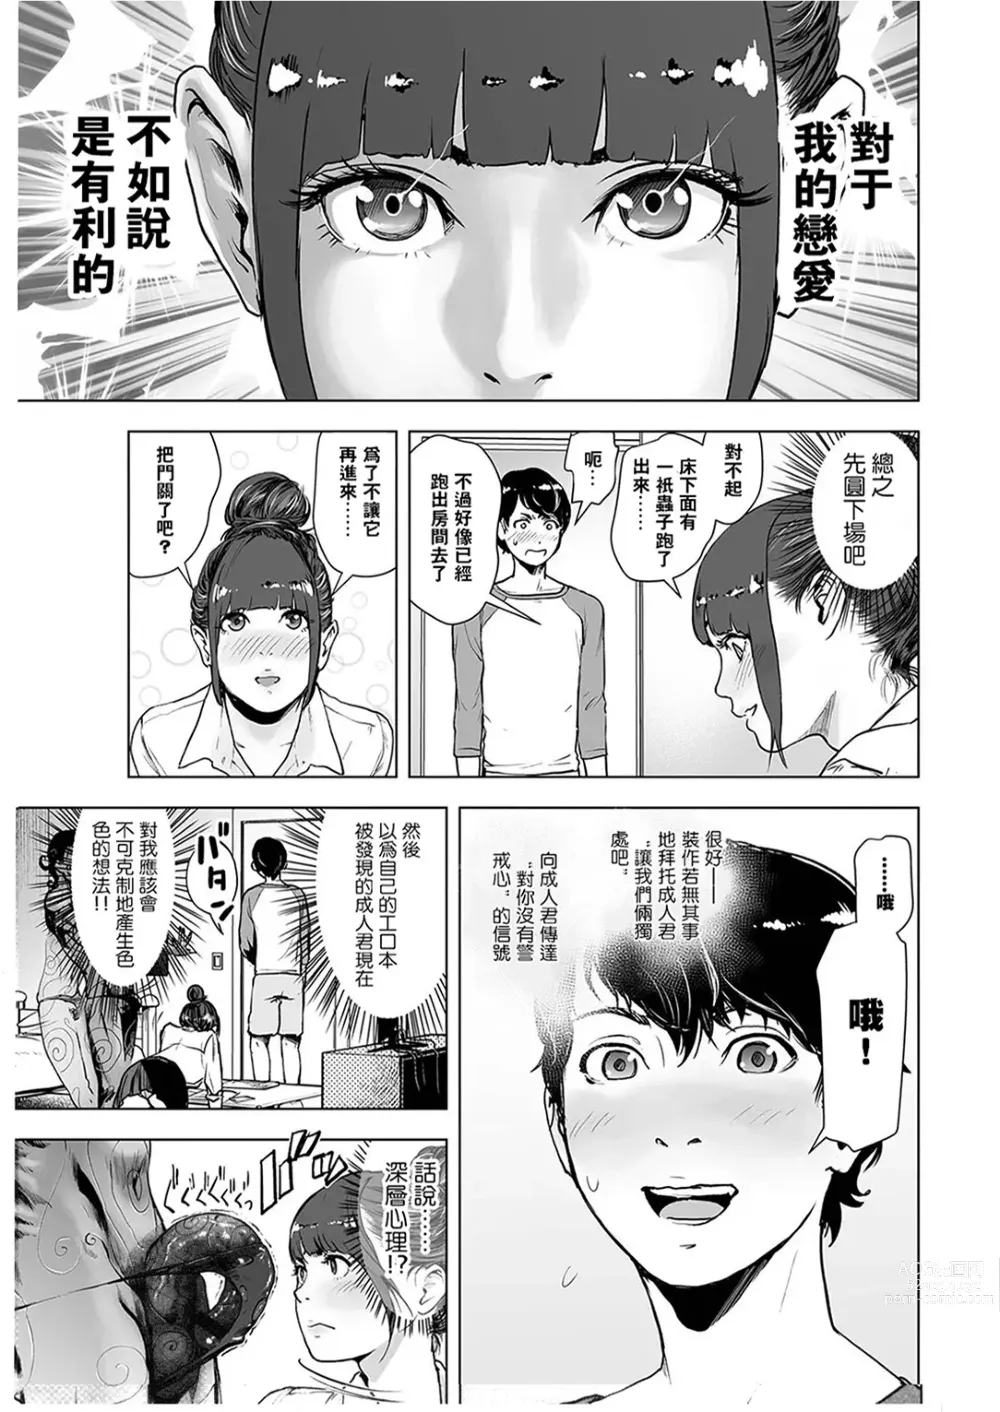 Page 8 of manga #Futsuu no Onnanoko